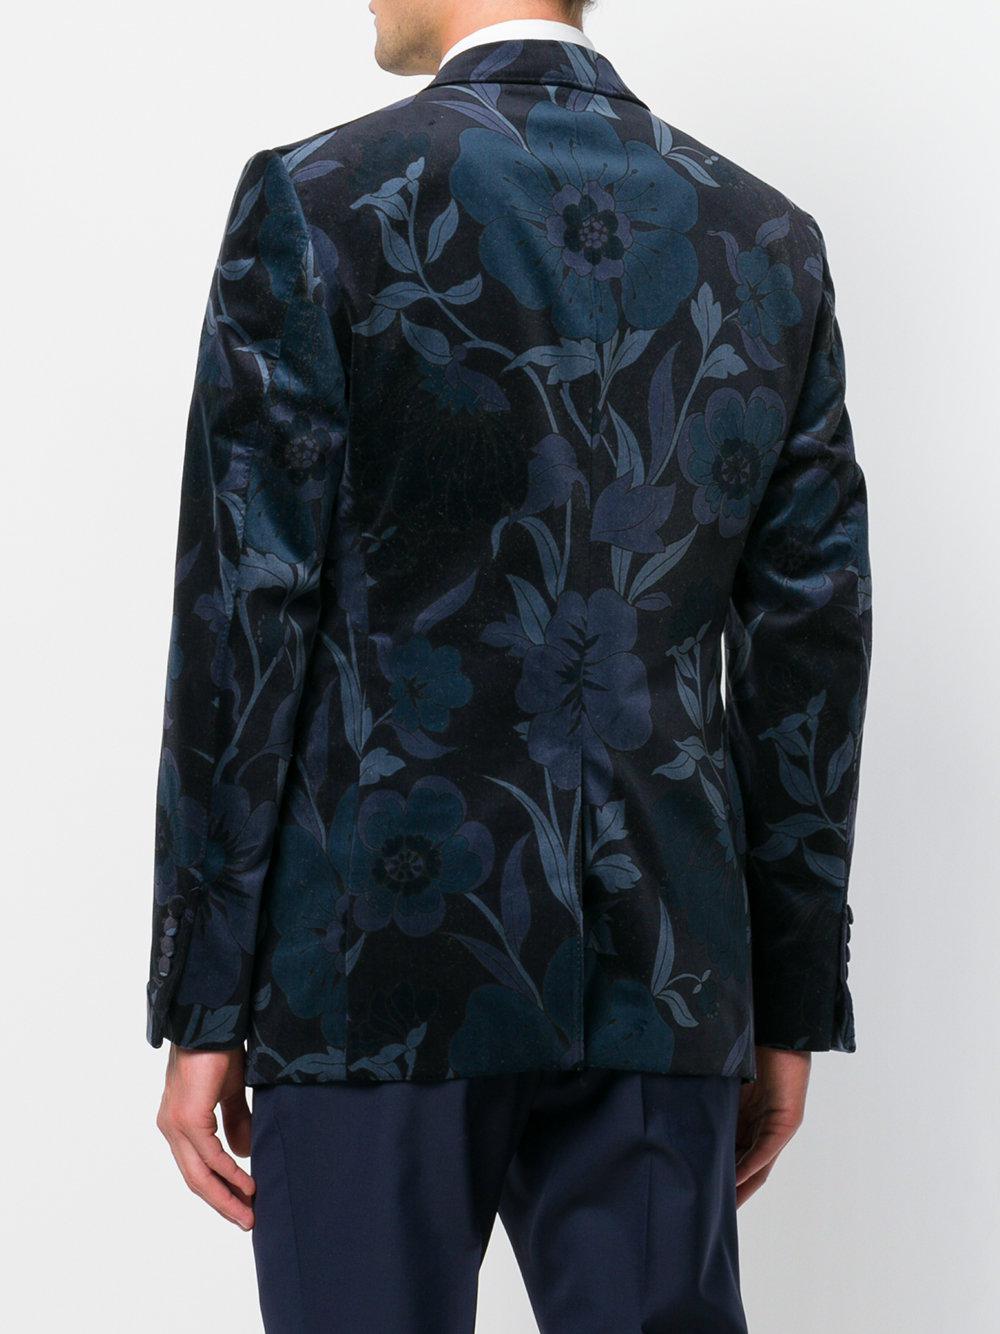 Tom Ford Floral Print Utility Jacket